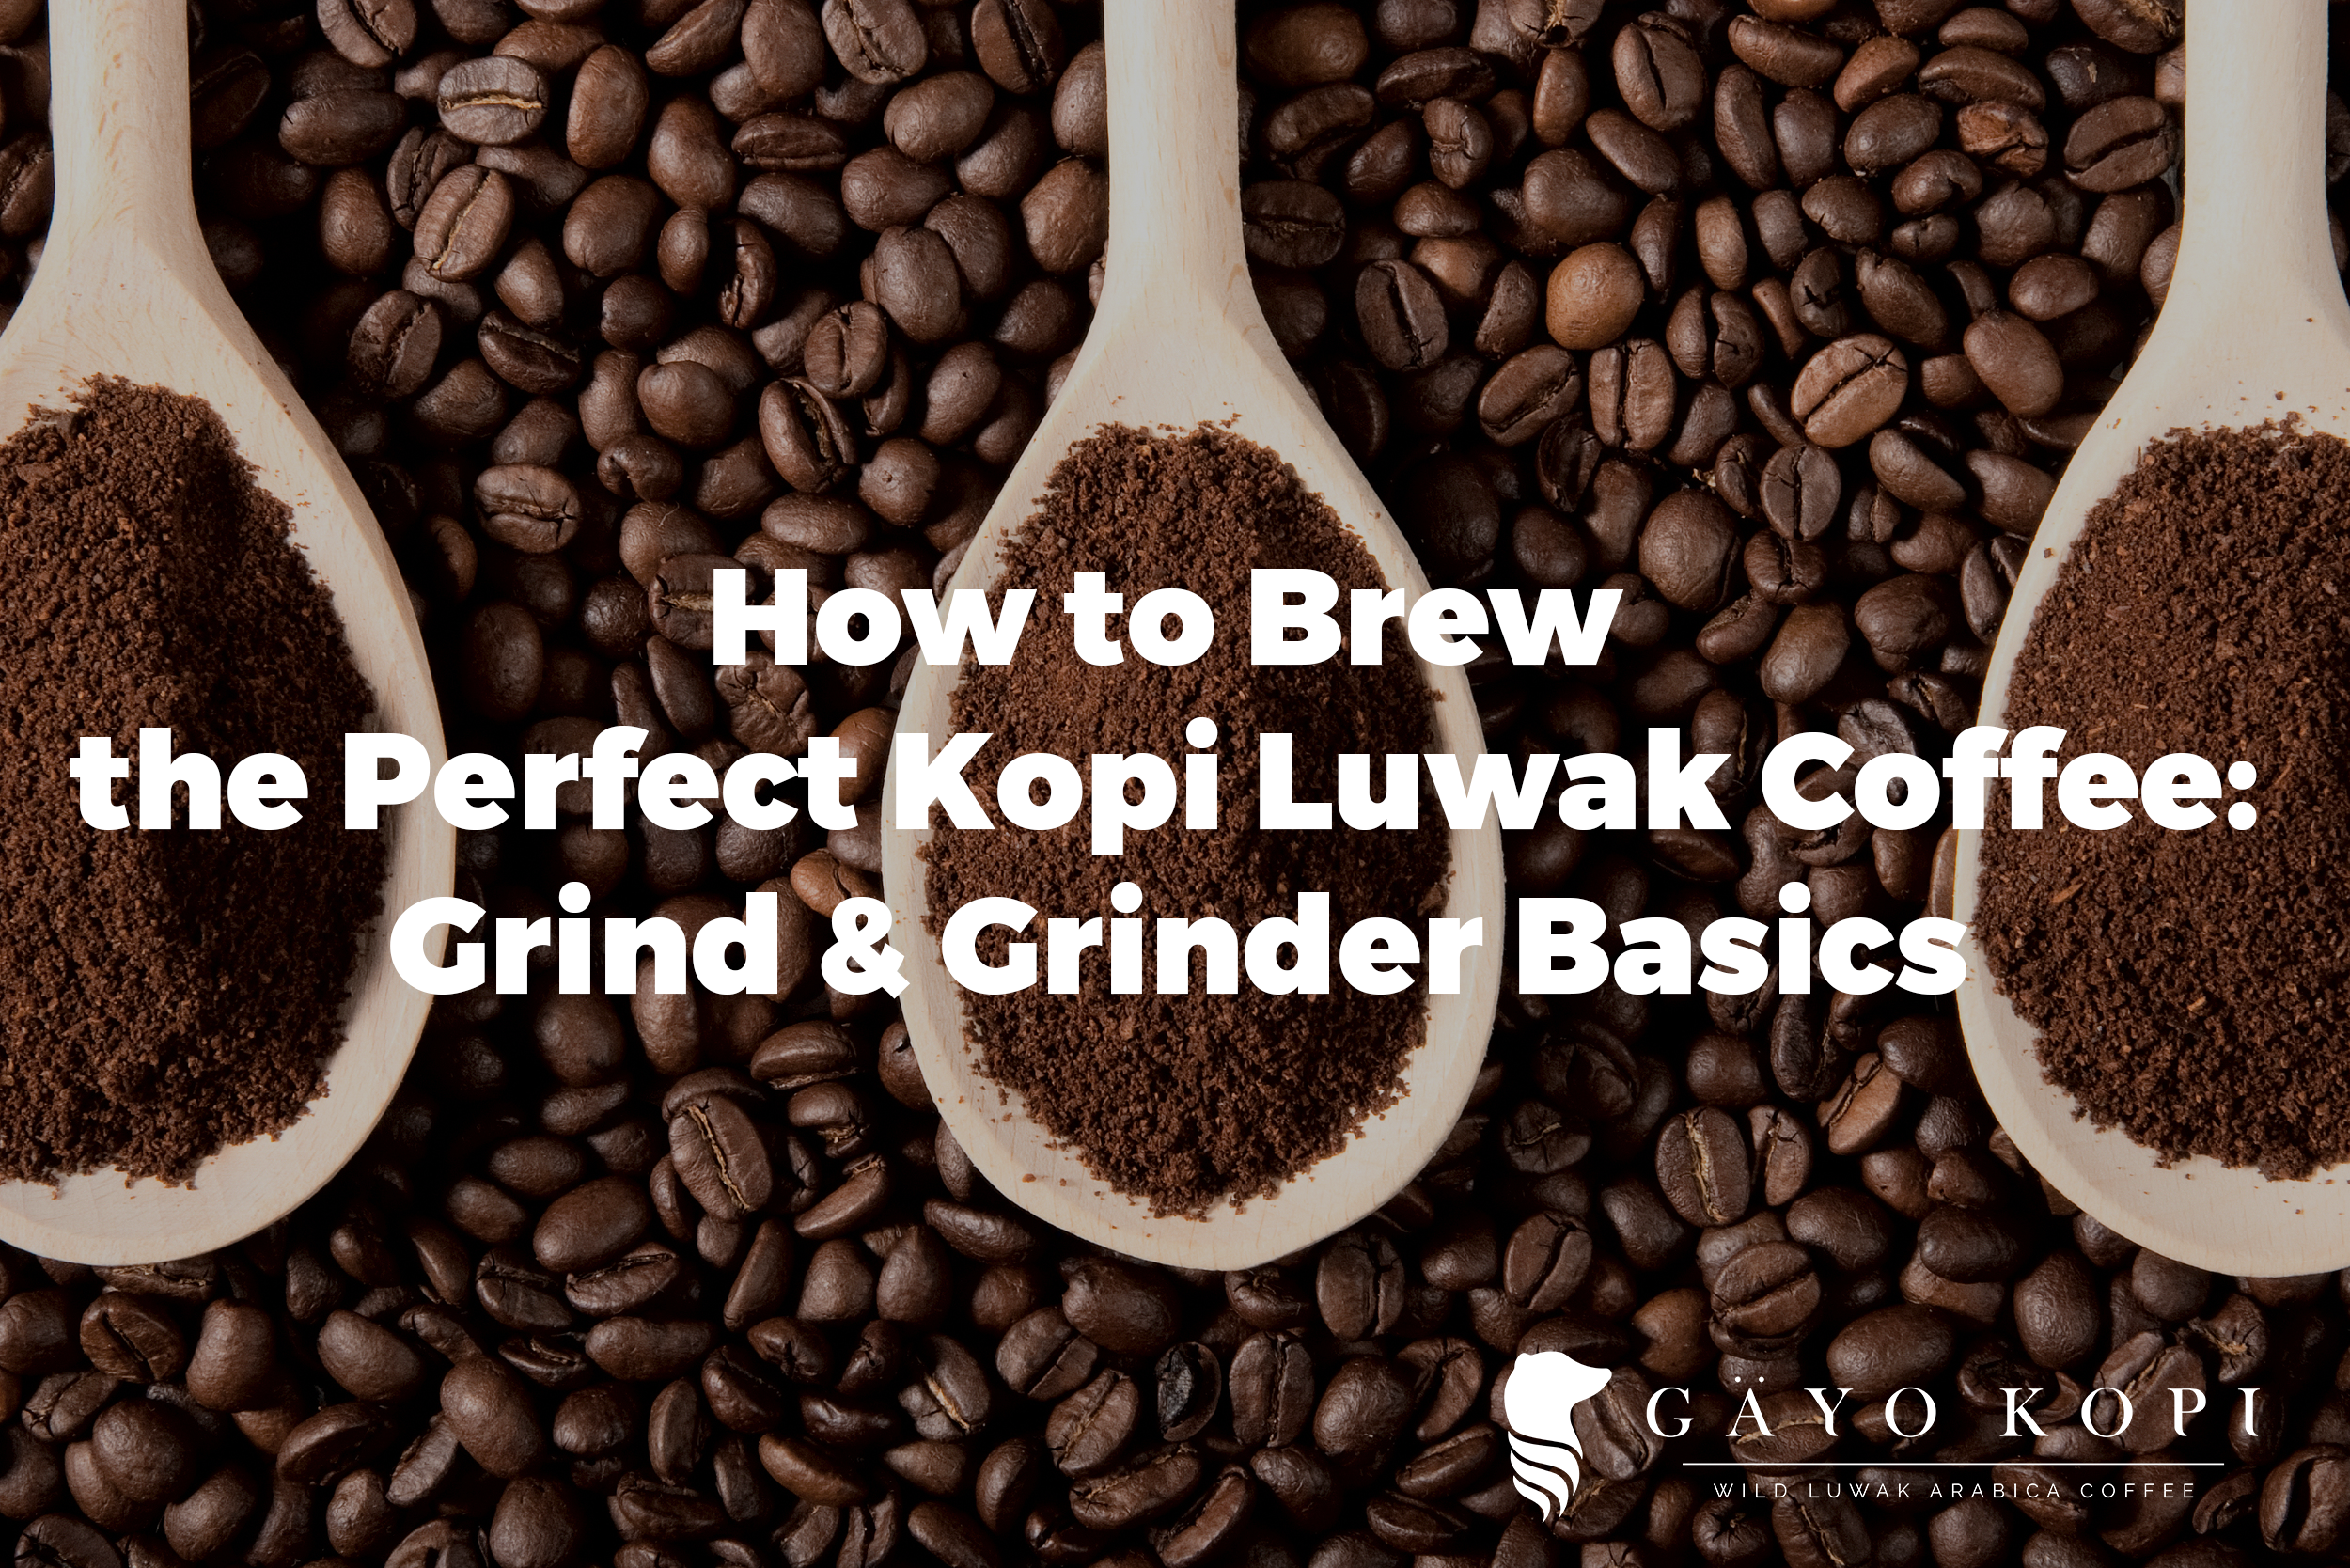 https://gayokopi.com/wp-content/uploads/2016/08/How-to-Brew-the-Perfect-Kopi-Luwak-Coffee-Grind-Grinder-Basics.png